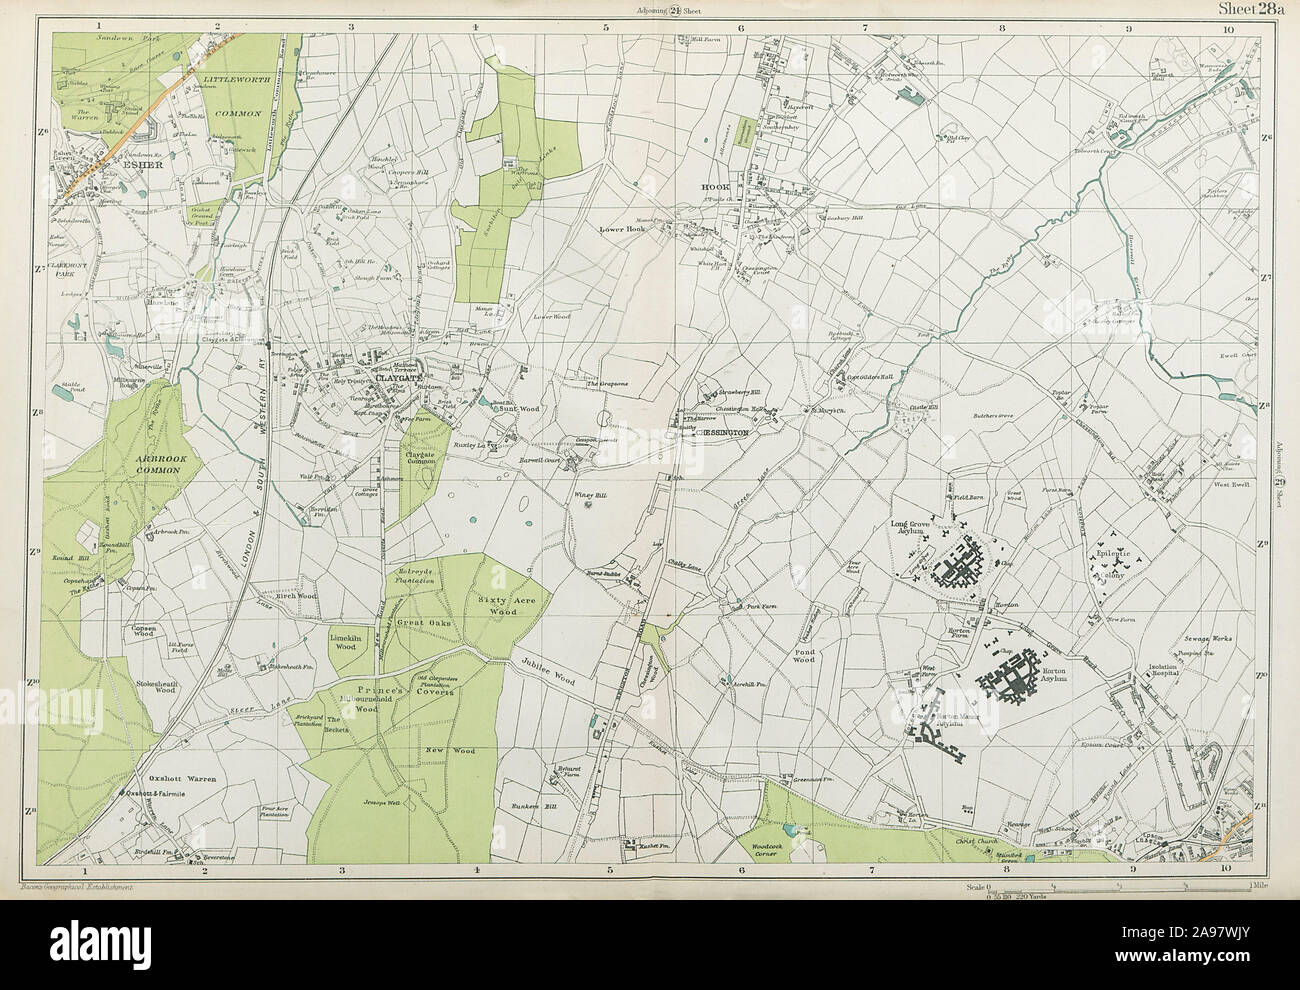 ESHER/EWELL Epsom Claygate Oxshott Hook Chessington Hinchley Wood.BACON 1920 map Stock Photo